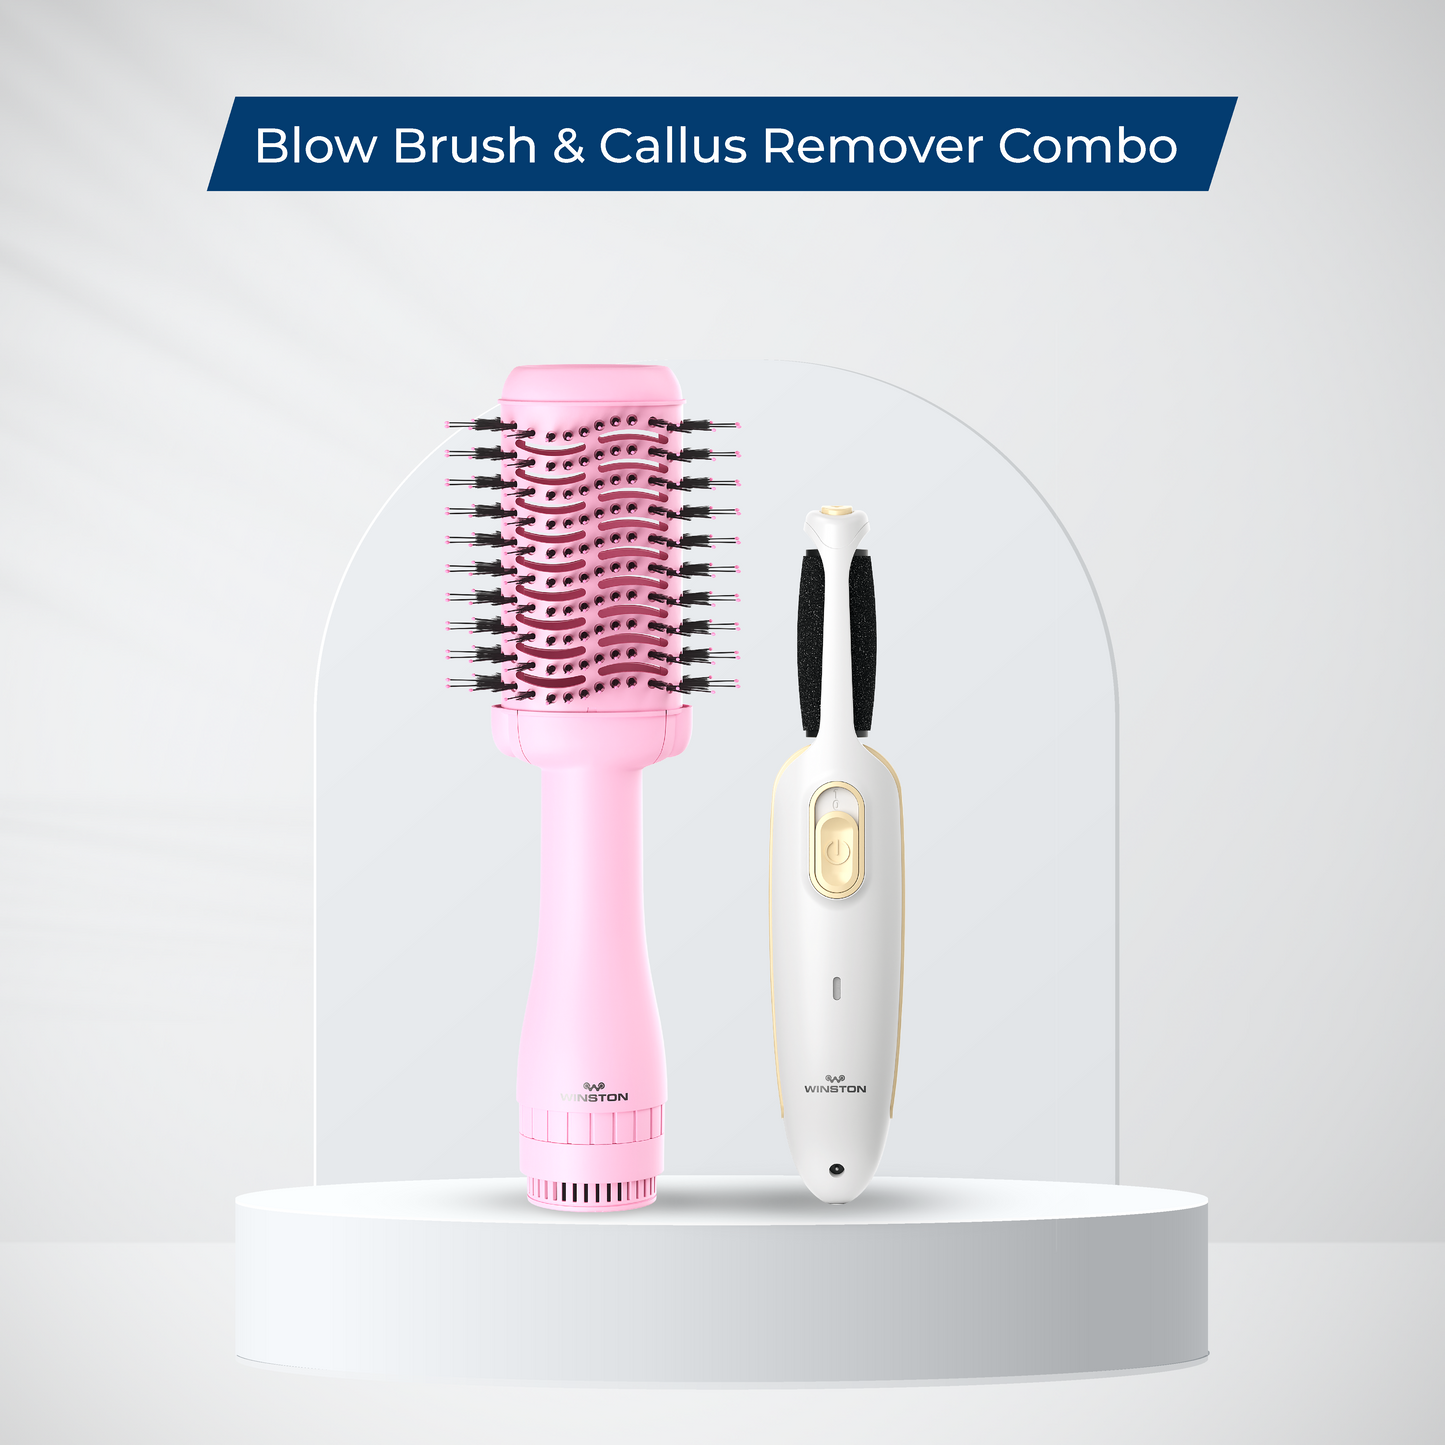 Blow Brush & Callus Remover Combo